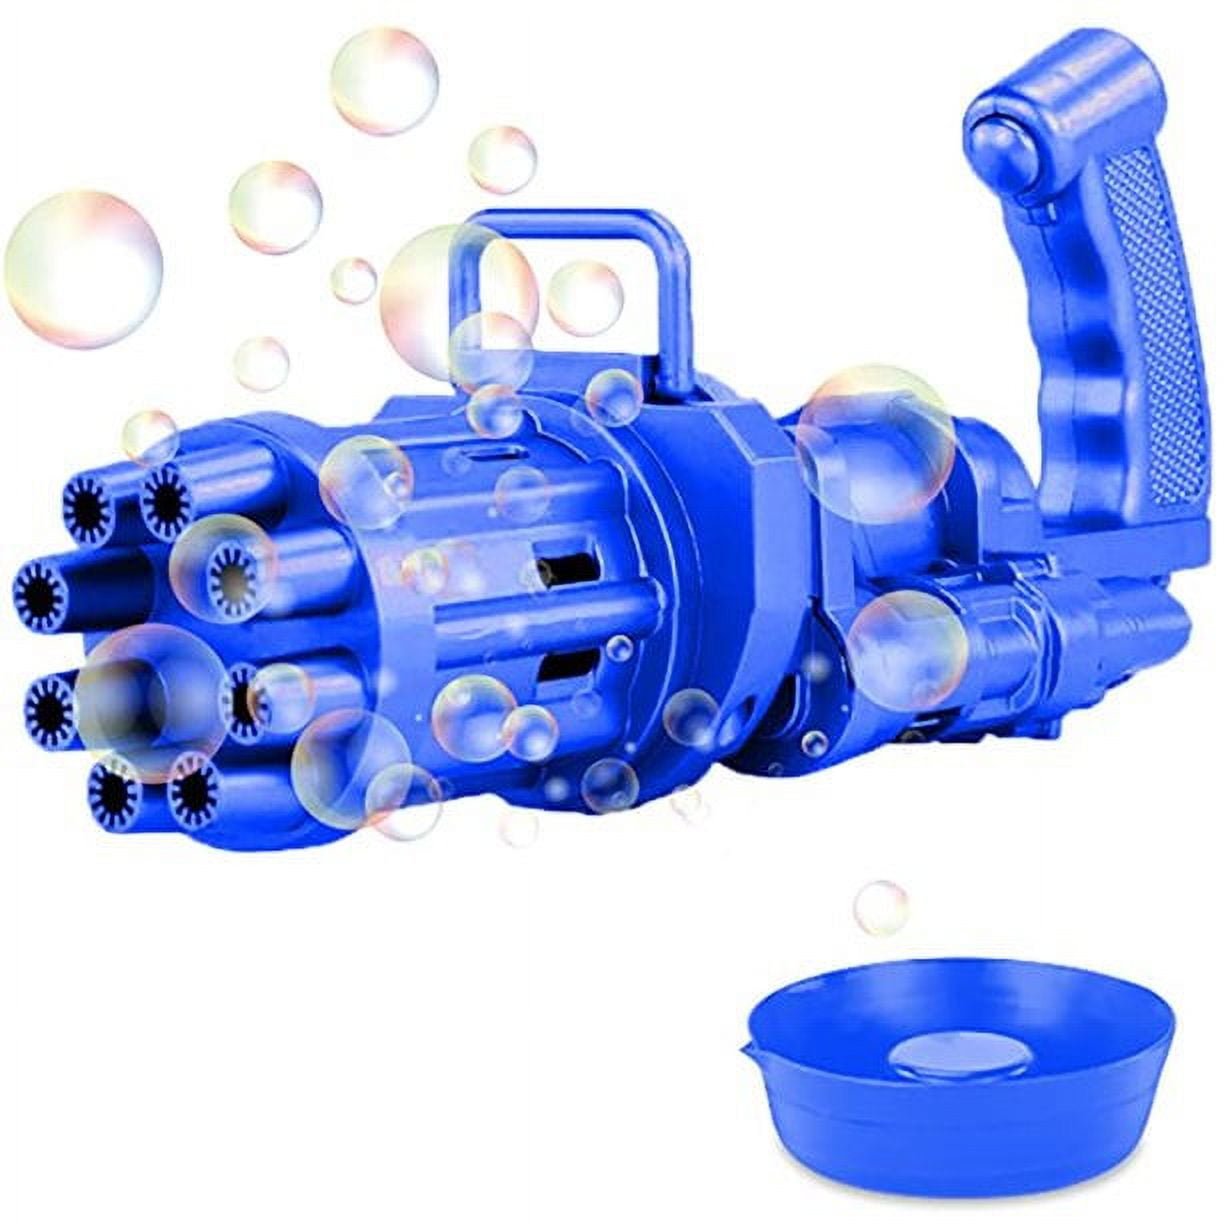 Autrucker Bennol Bubble Gun, 8 Holes Bubble Machine,Bubble Guns with 360°Leak-Proof  Design,Automatic Bubble Gun for Toddlers Children Backyard Outdoor Camping  Pink+Blue 